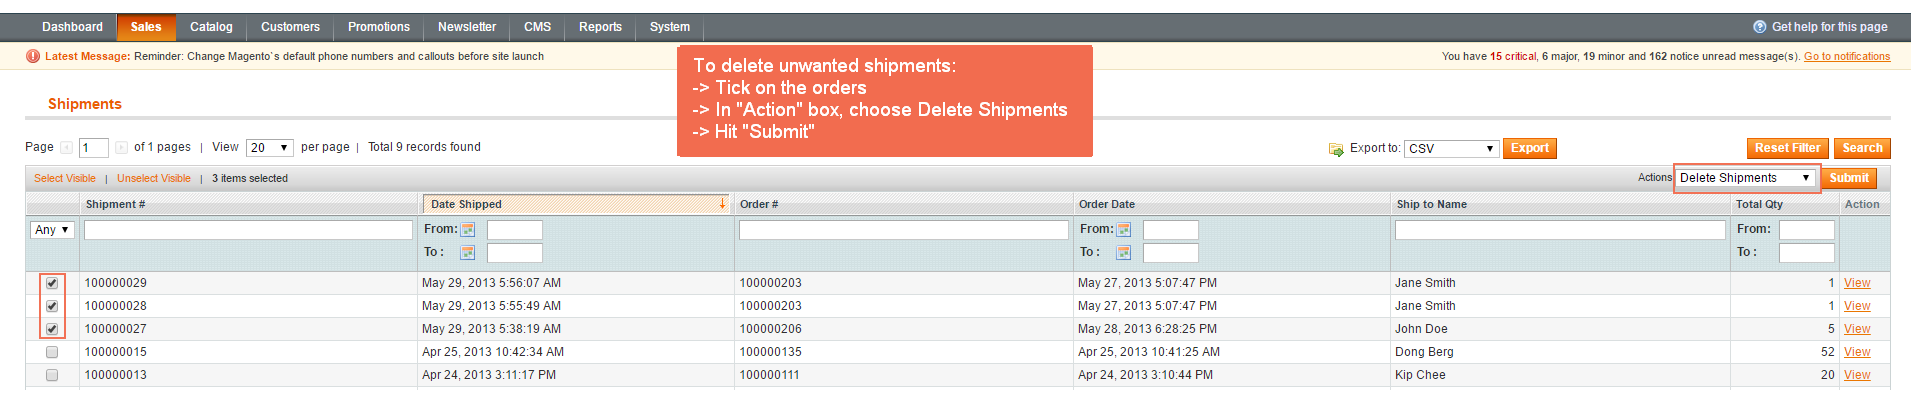 pick shipments in grid to delete